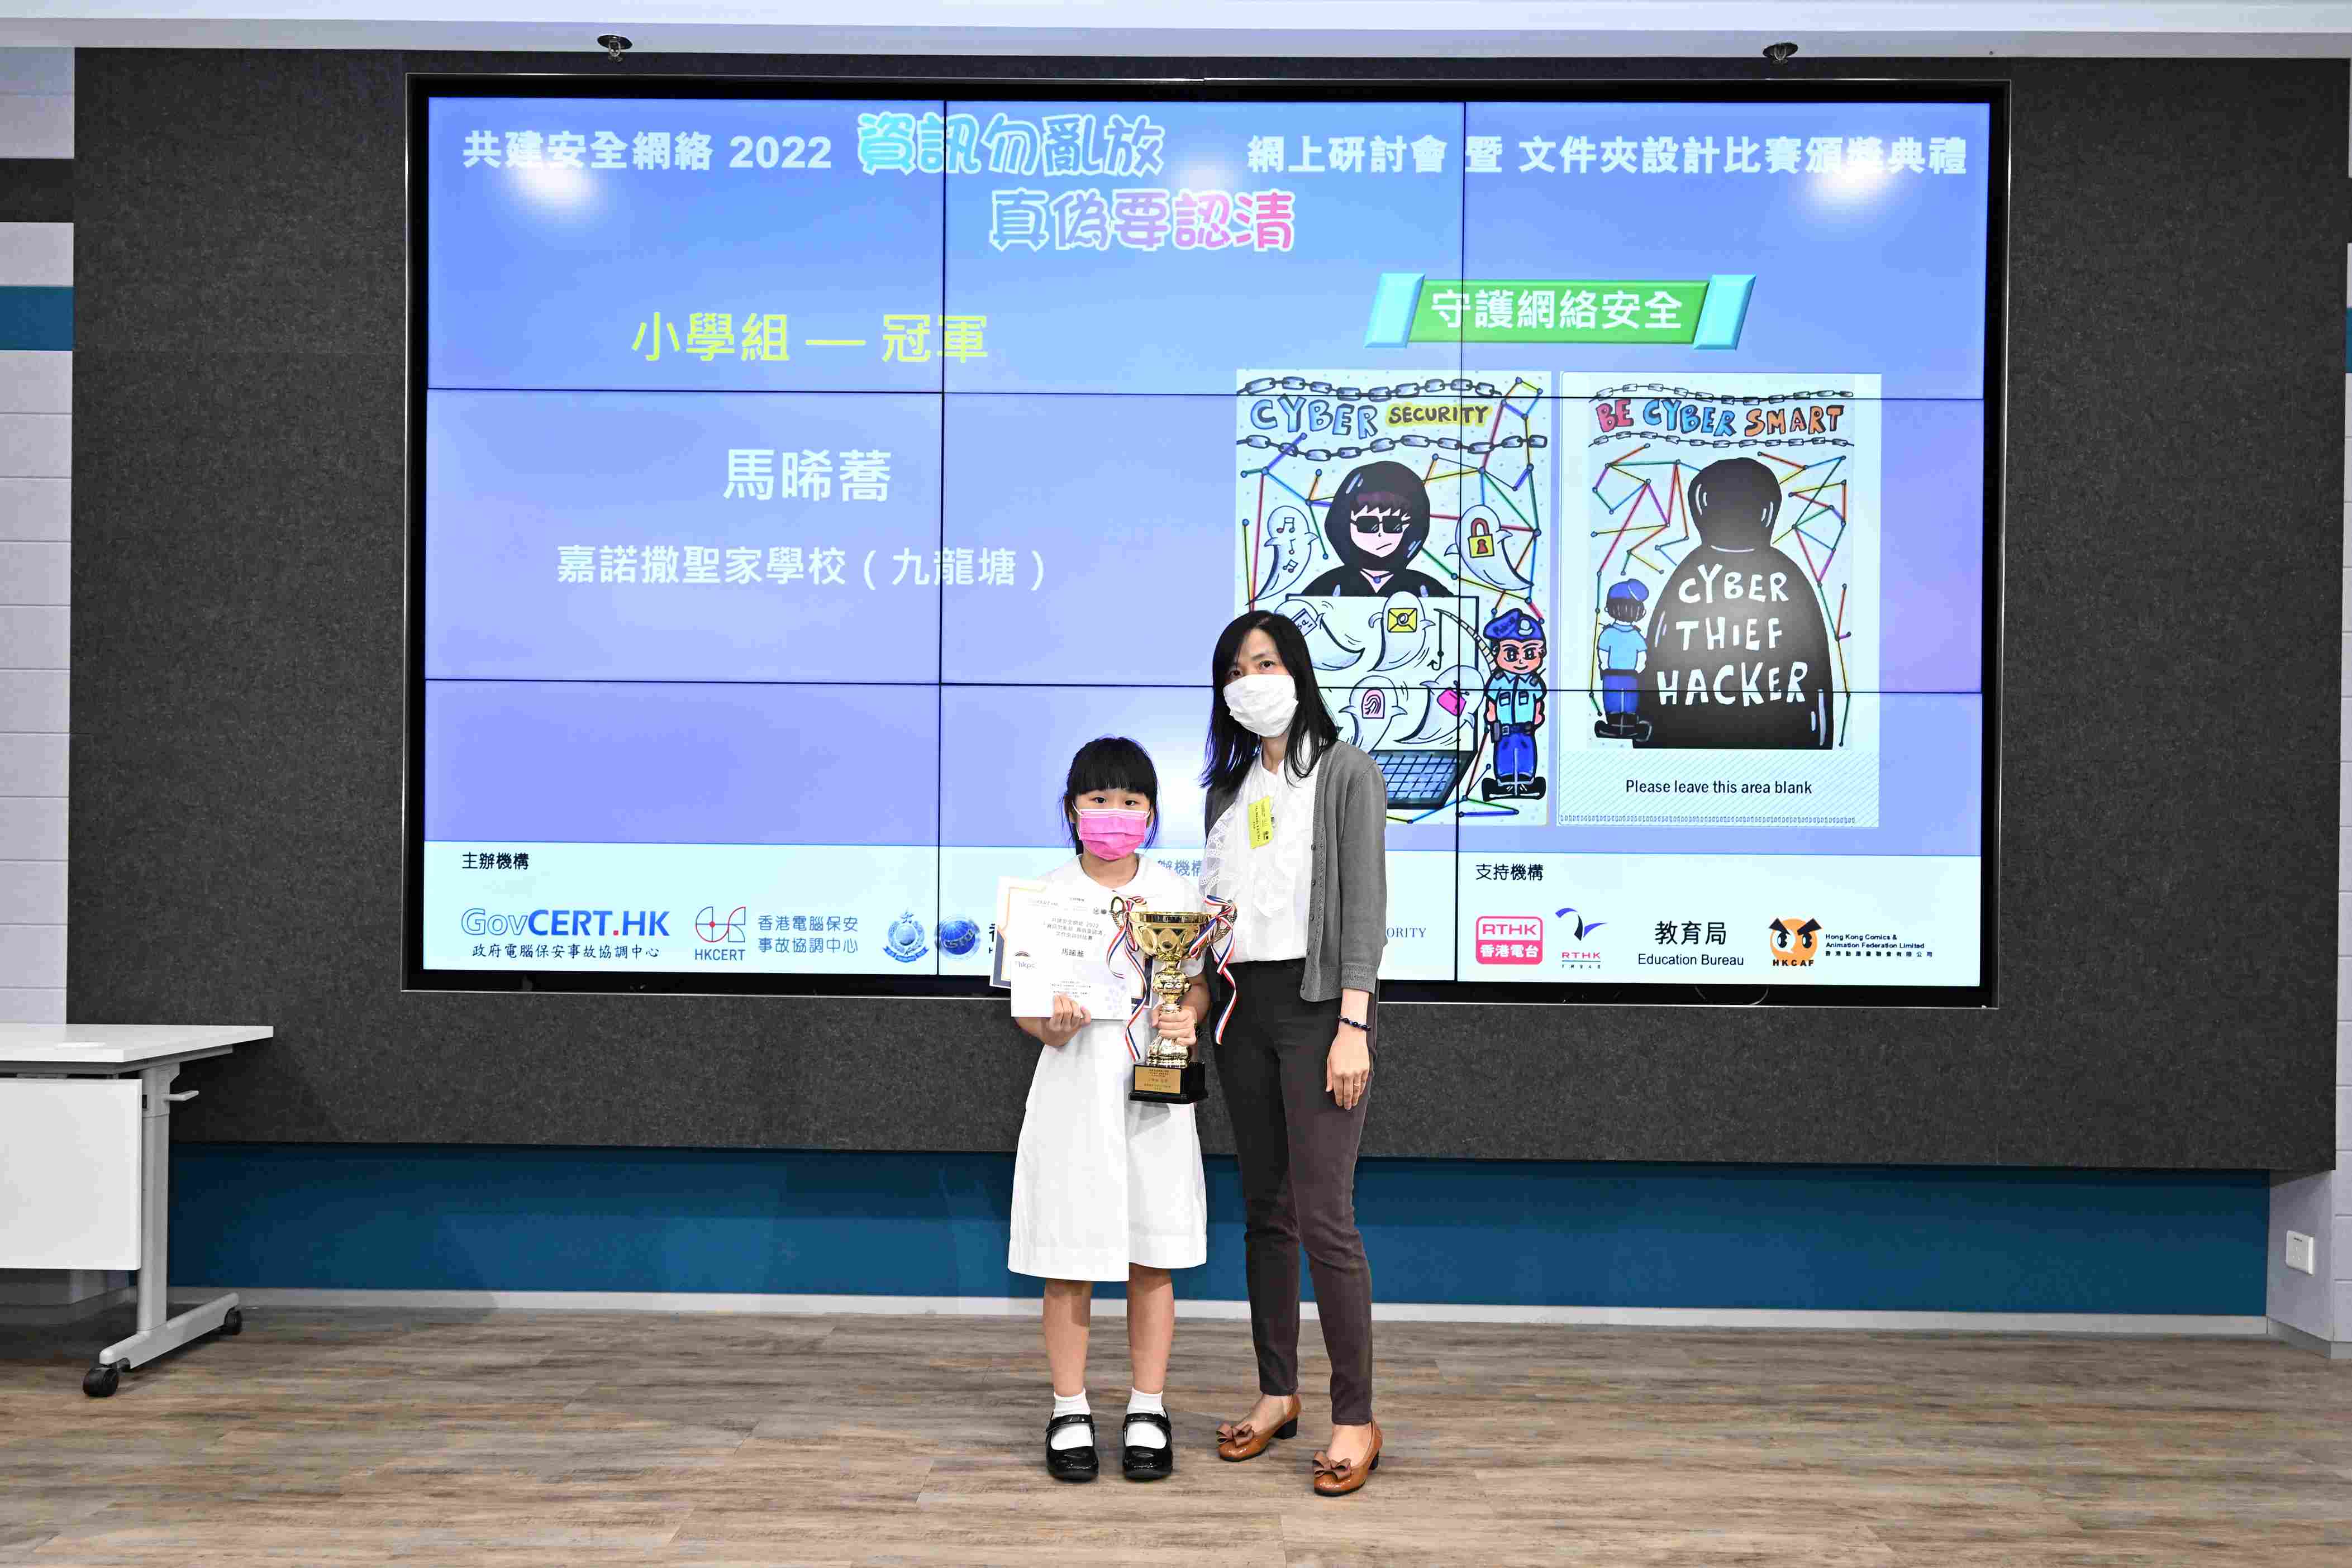 Champion of Primary School Group - Ma Hei Kiu (Holy Family Canossian School (Kowloon Tong))